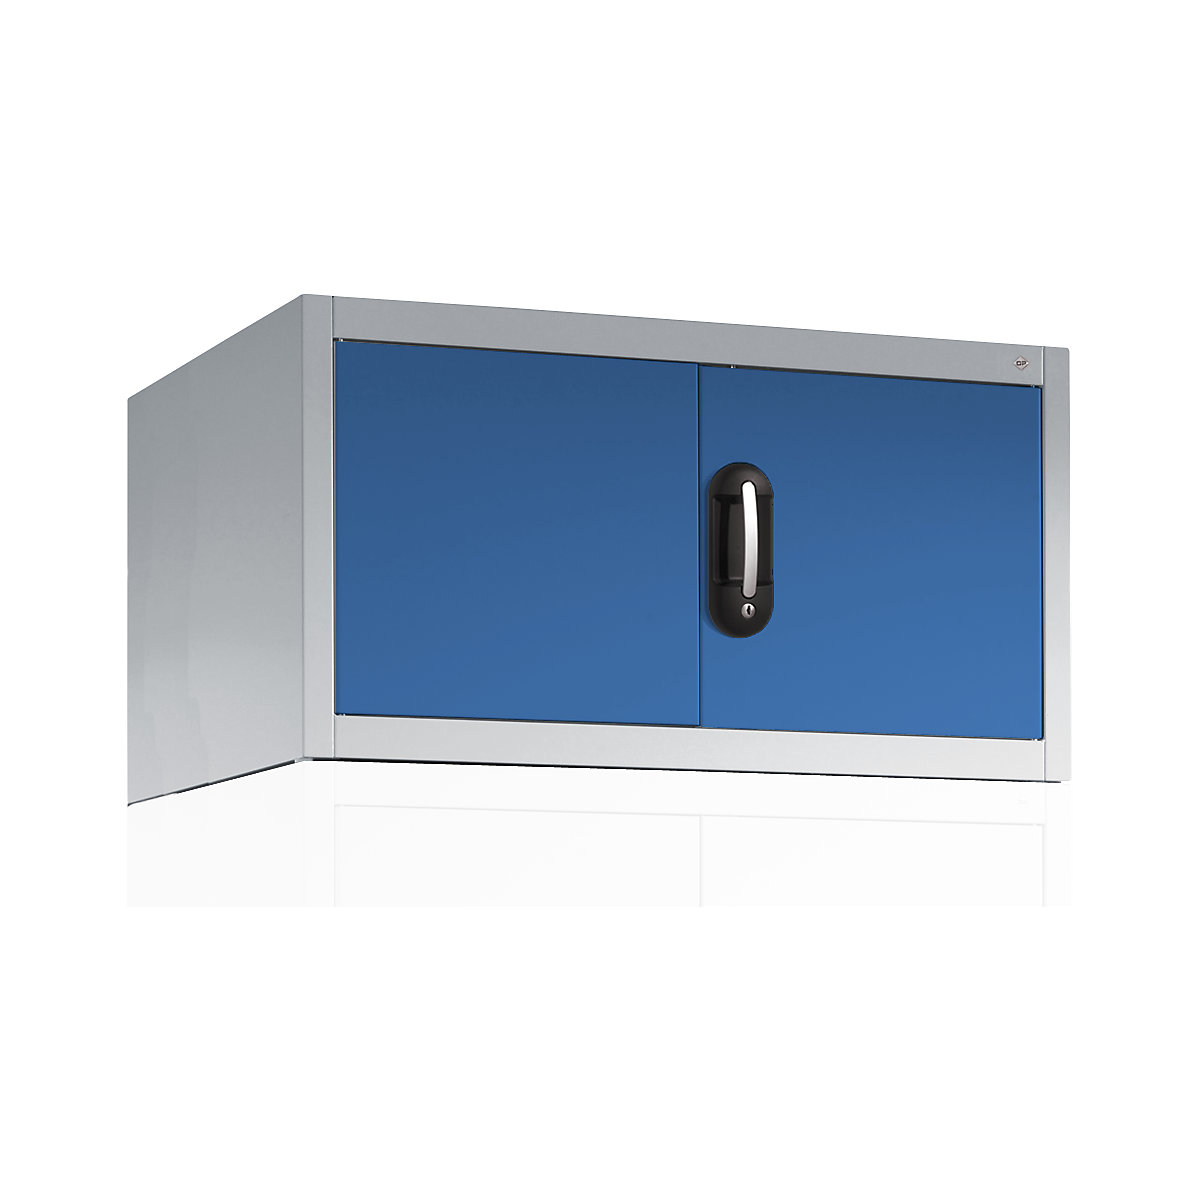 Armário de sobrepor ACURADO com portas de batente – C+P, AxLxP 500 x 930 x 500 mm, cinzento claro / azul claro-5